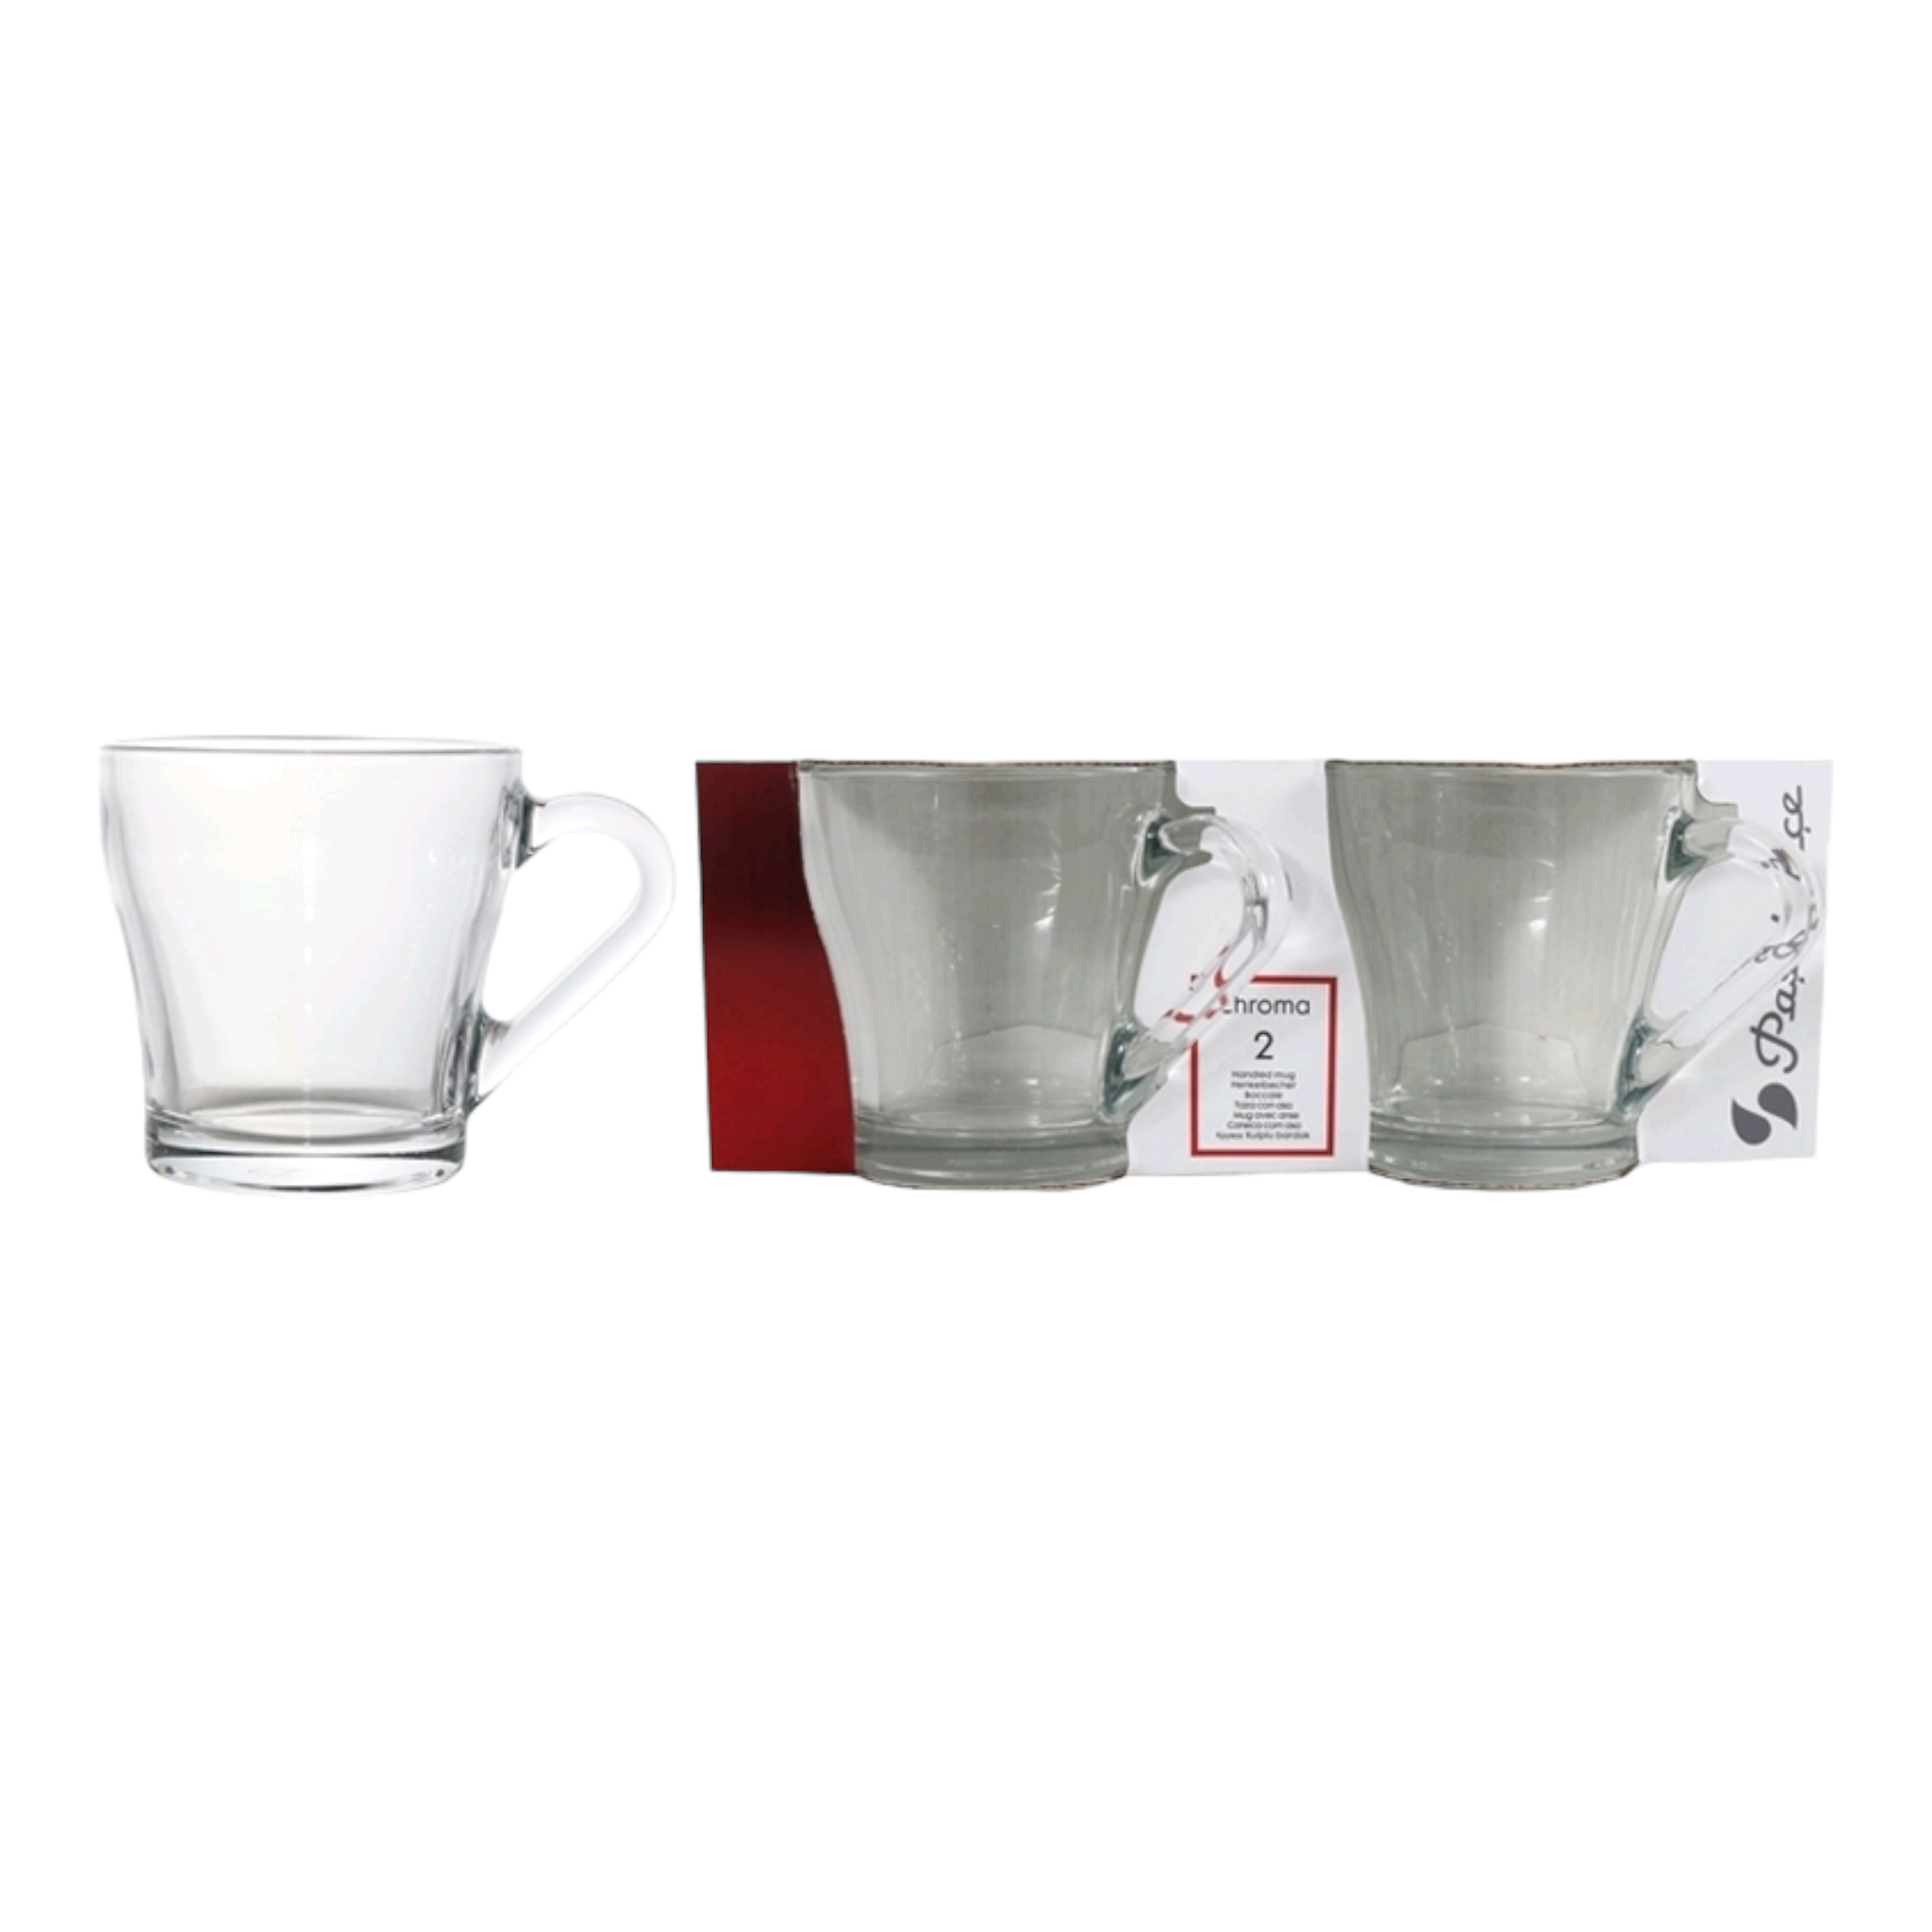 Pasabahce Chroma Glass Tea Coffee Mug 205ml 2pc 2422